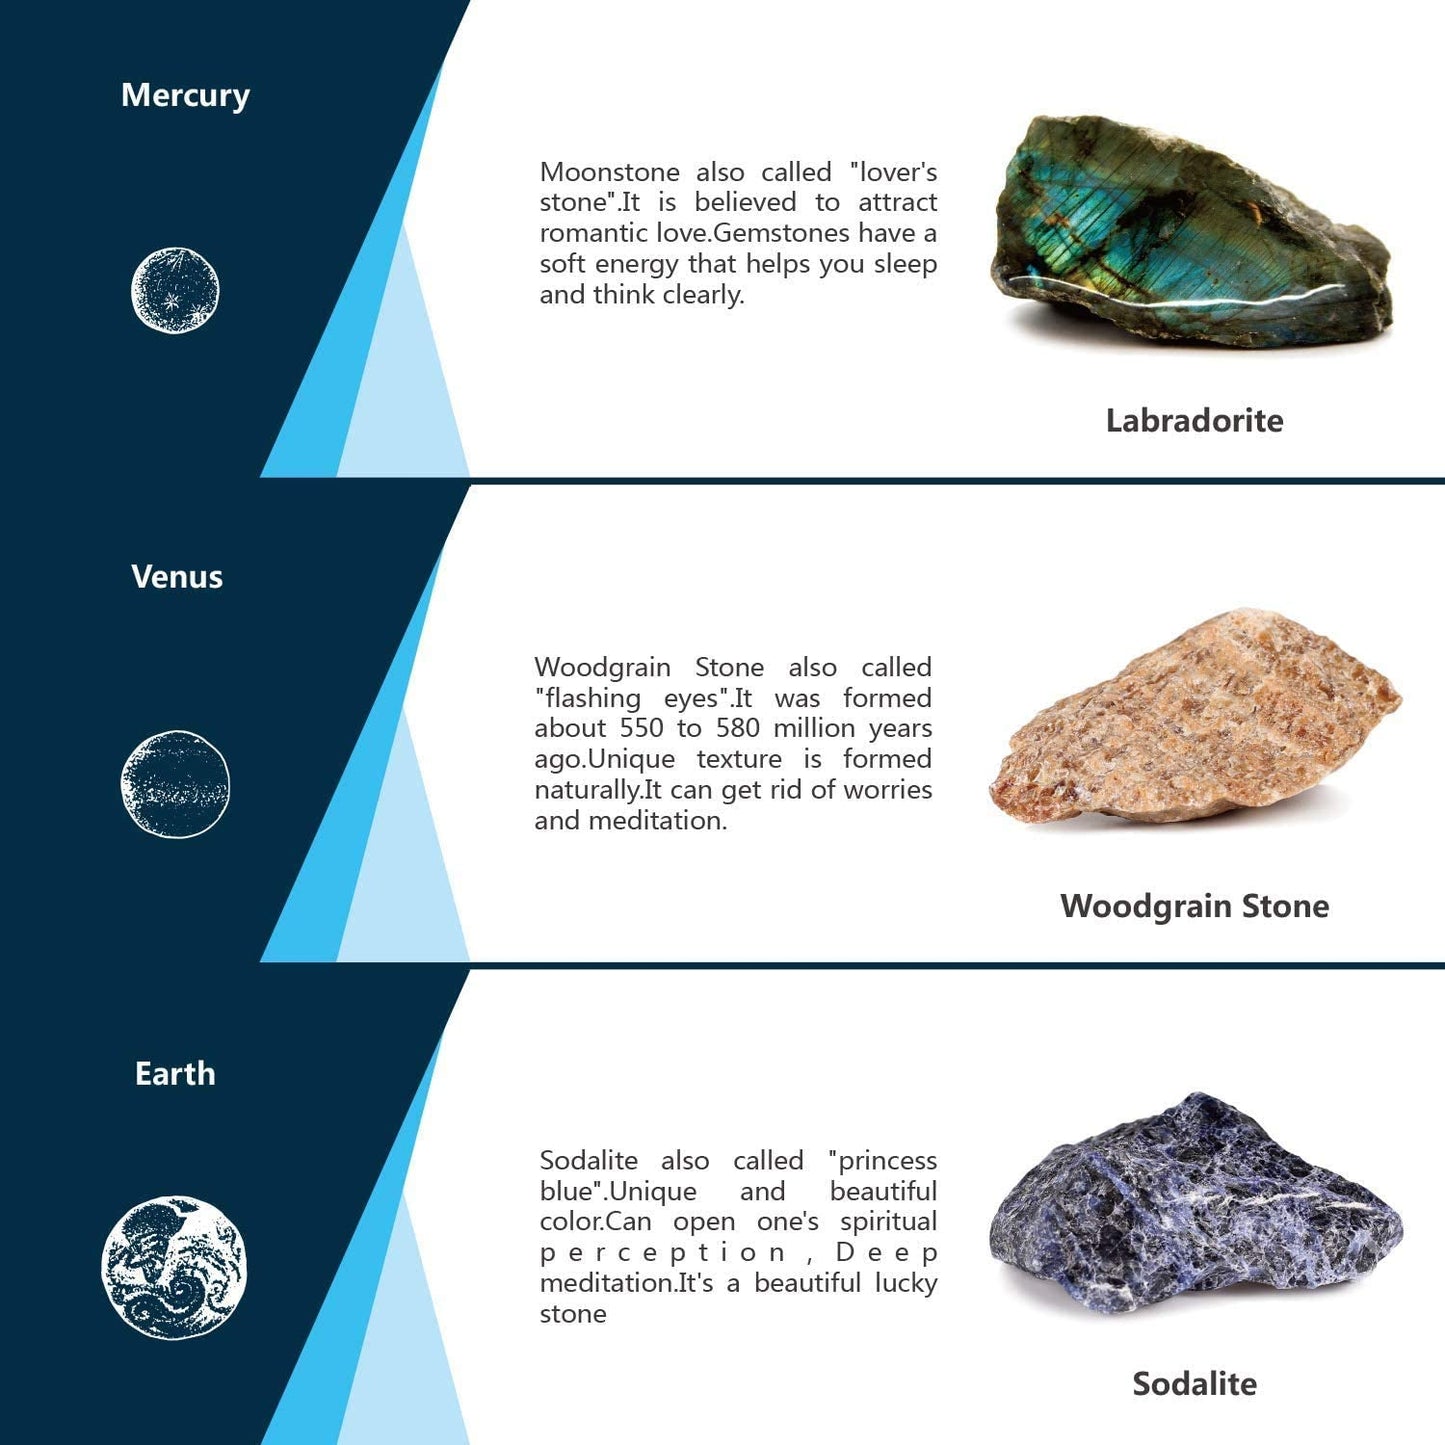 Information about gemstones called Labradorite, Woodgrain Stone and Sodalite